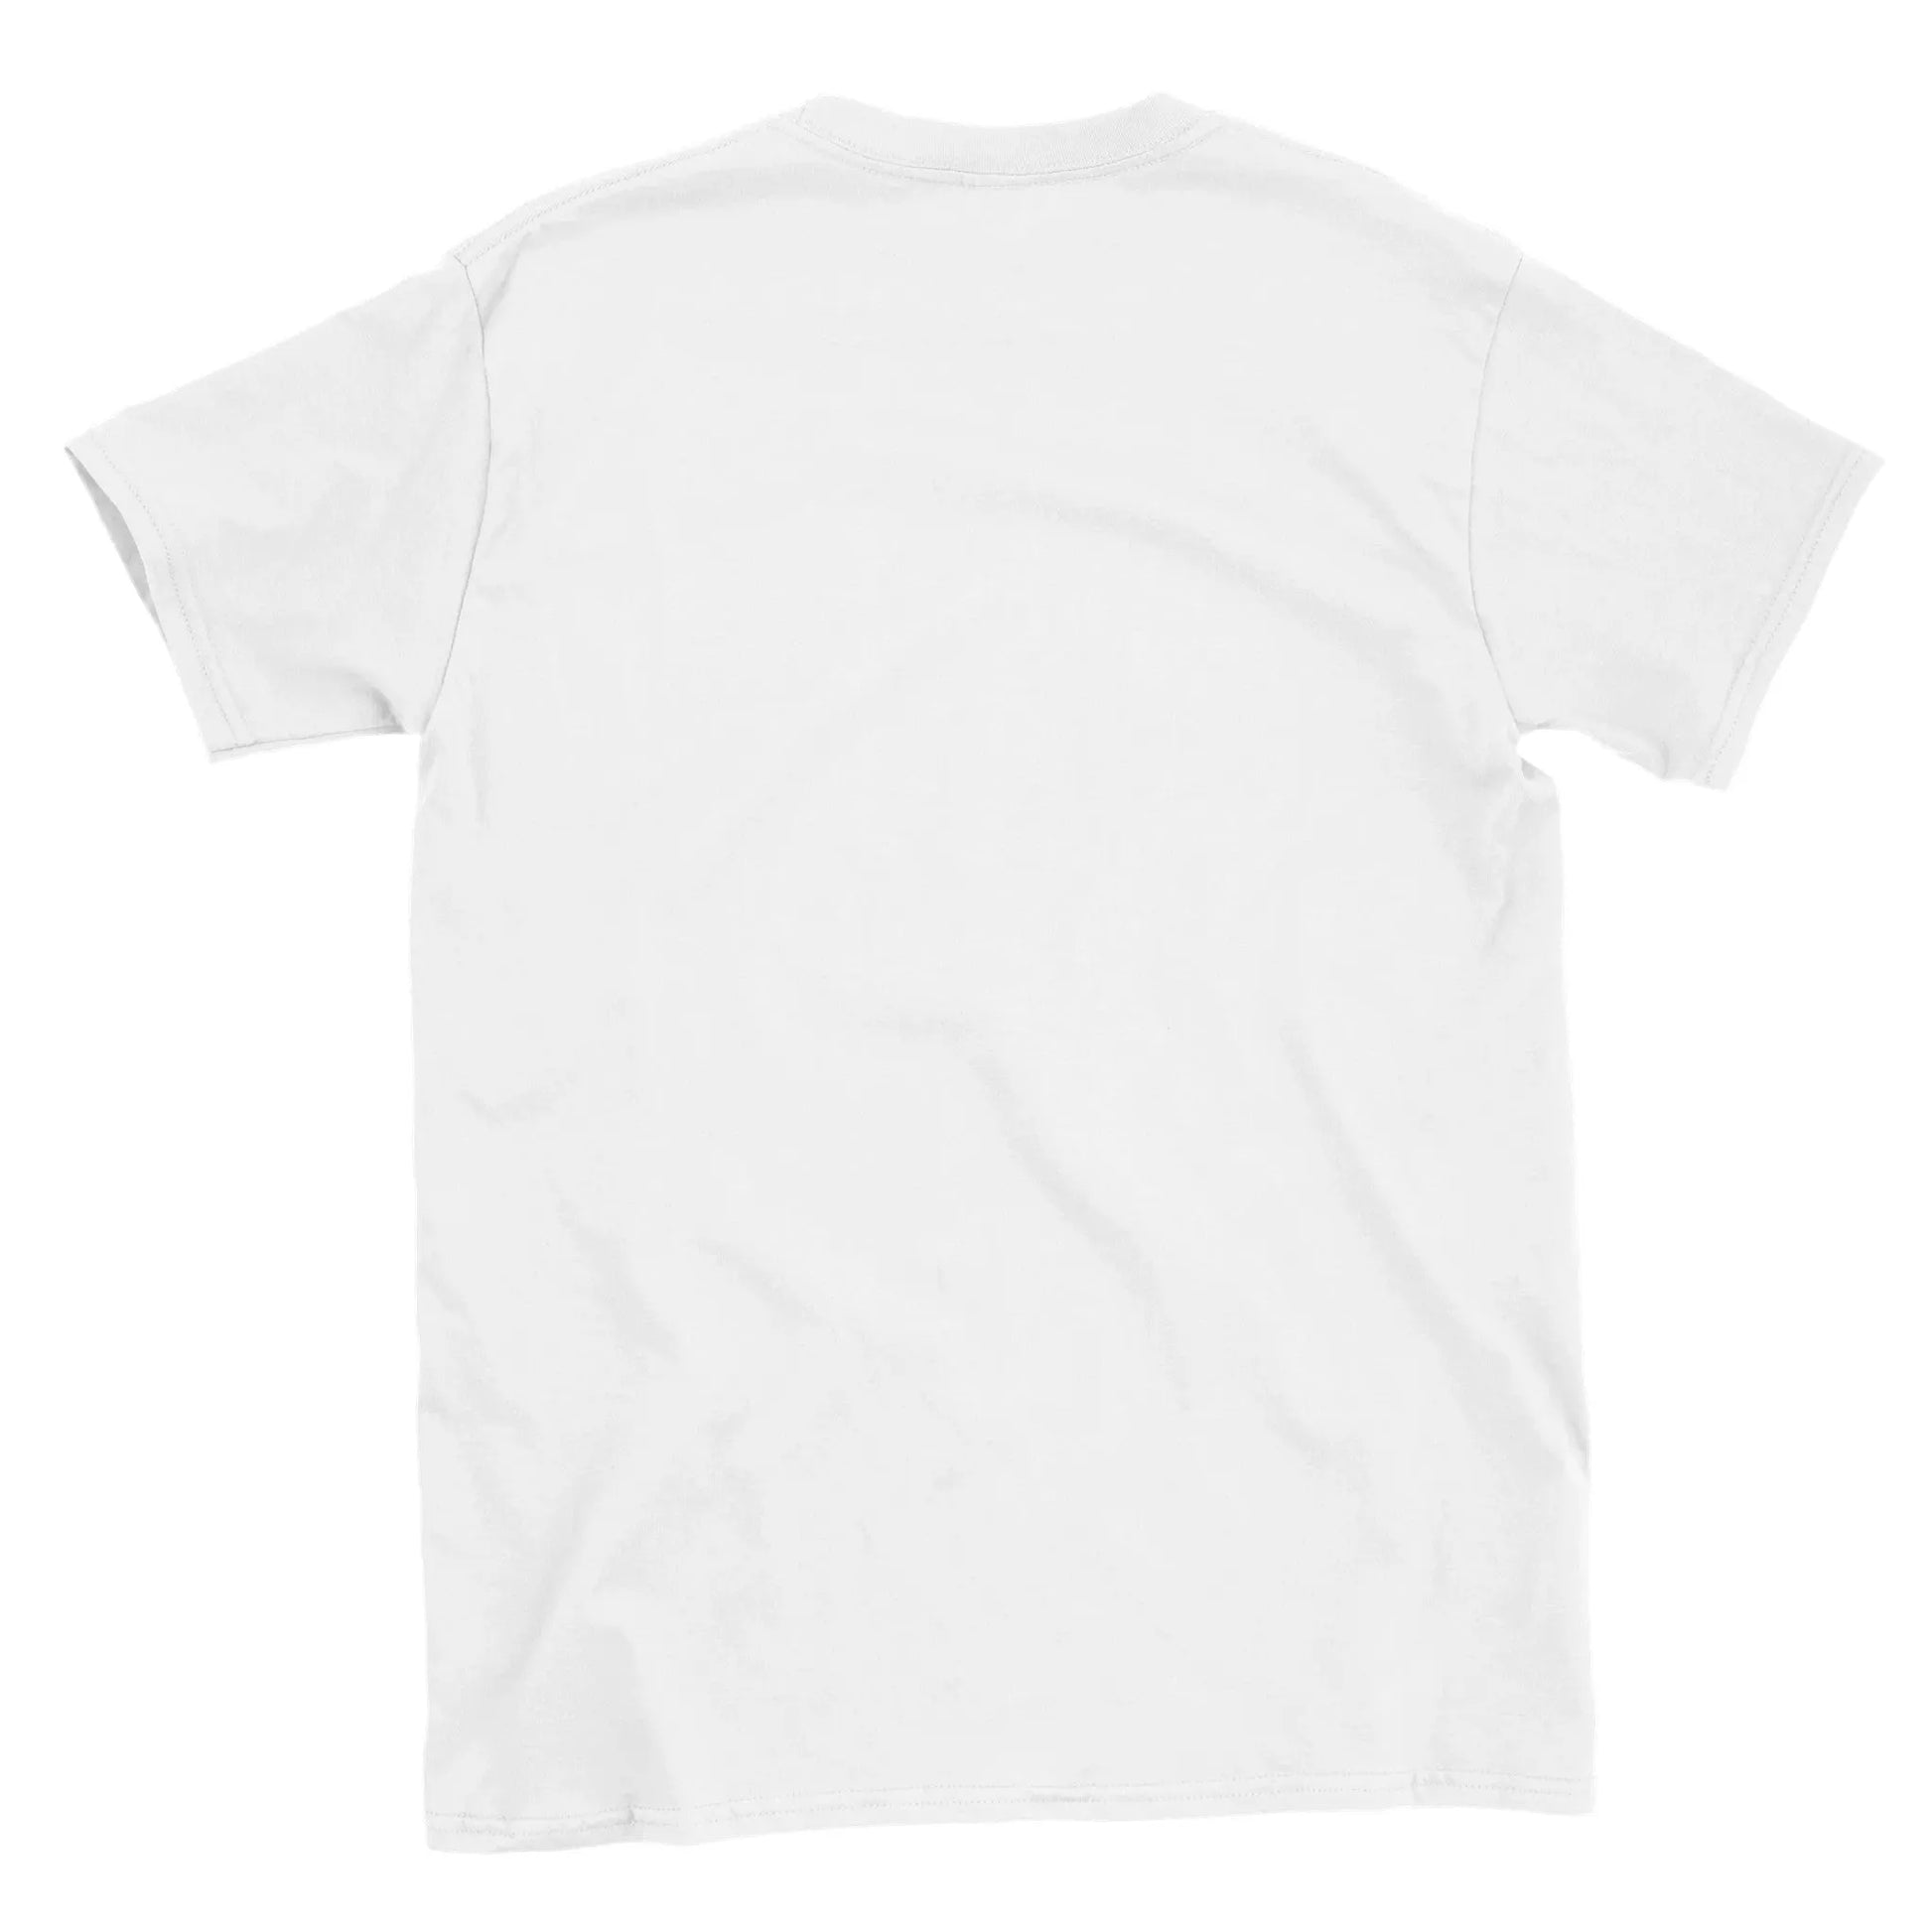 Classic Crewneck "Lovely Apple" T-Shirt - 100% soft, breathable cotton - BeinCart